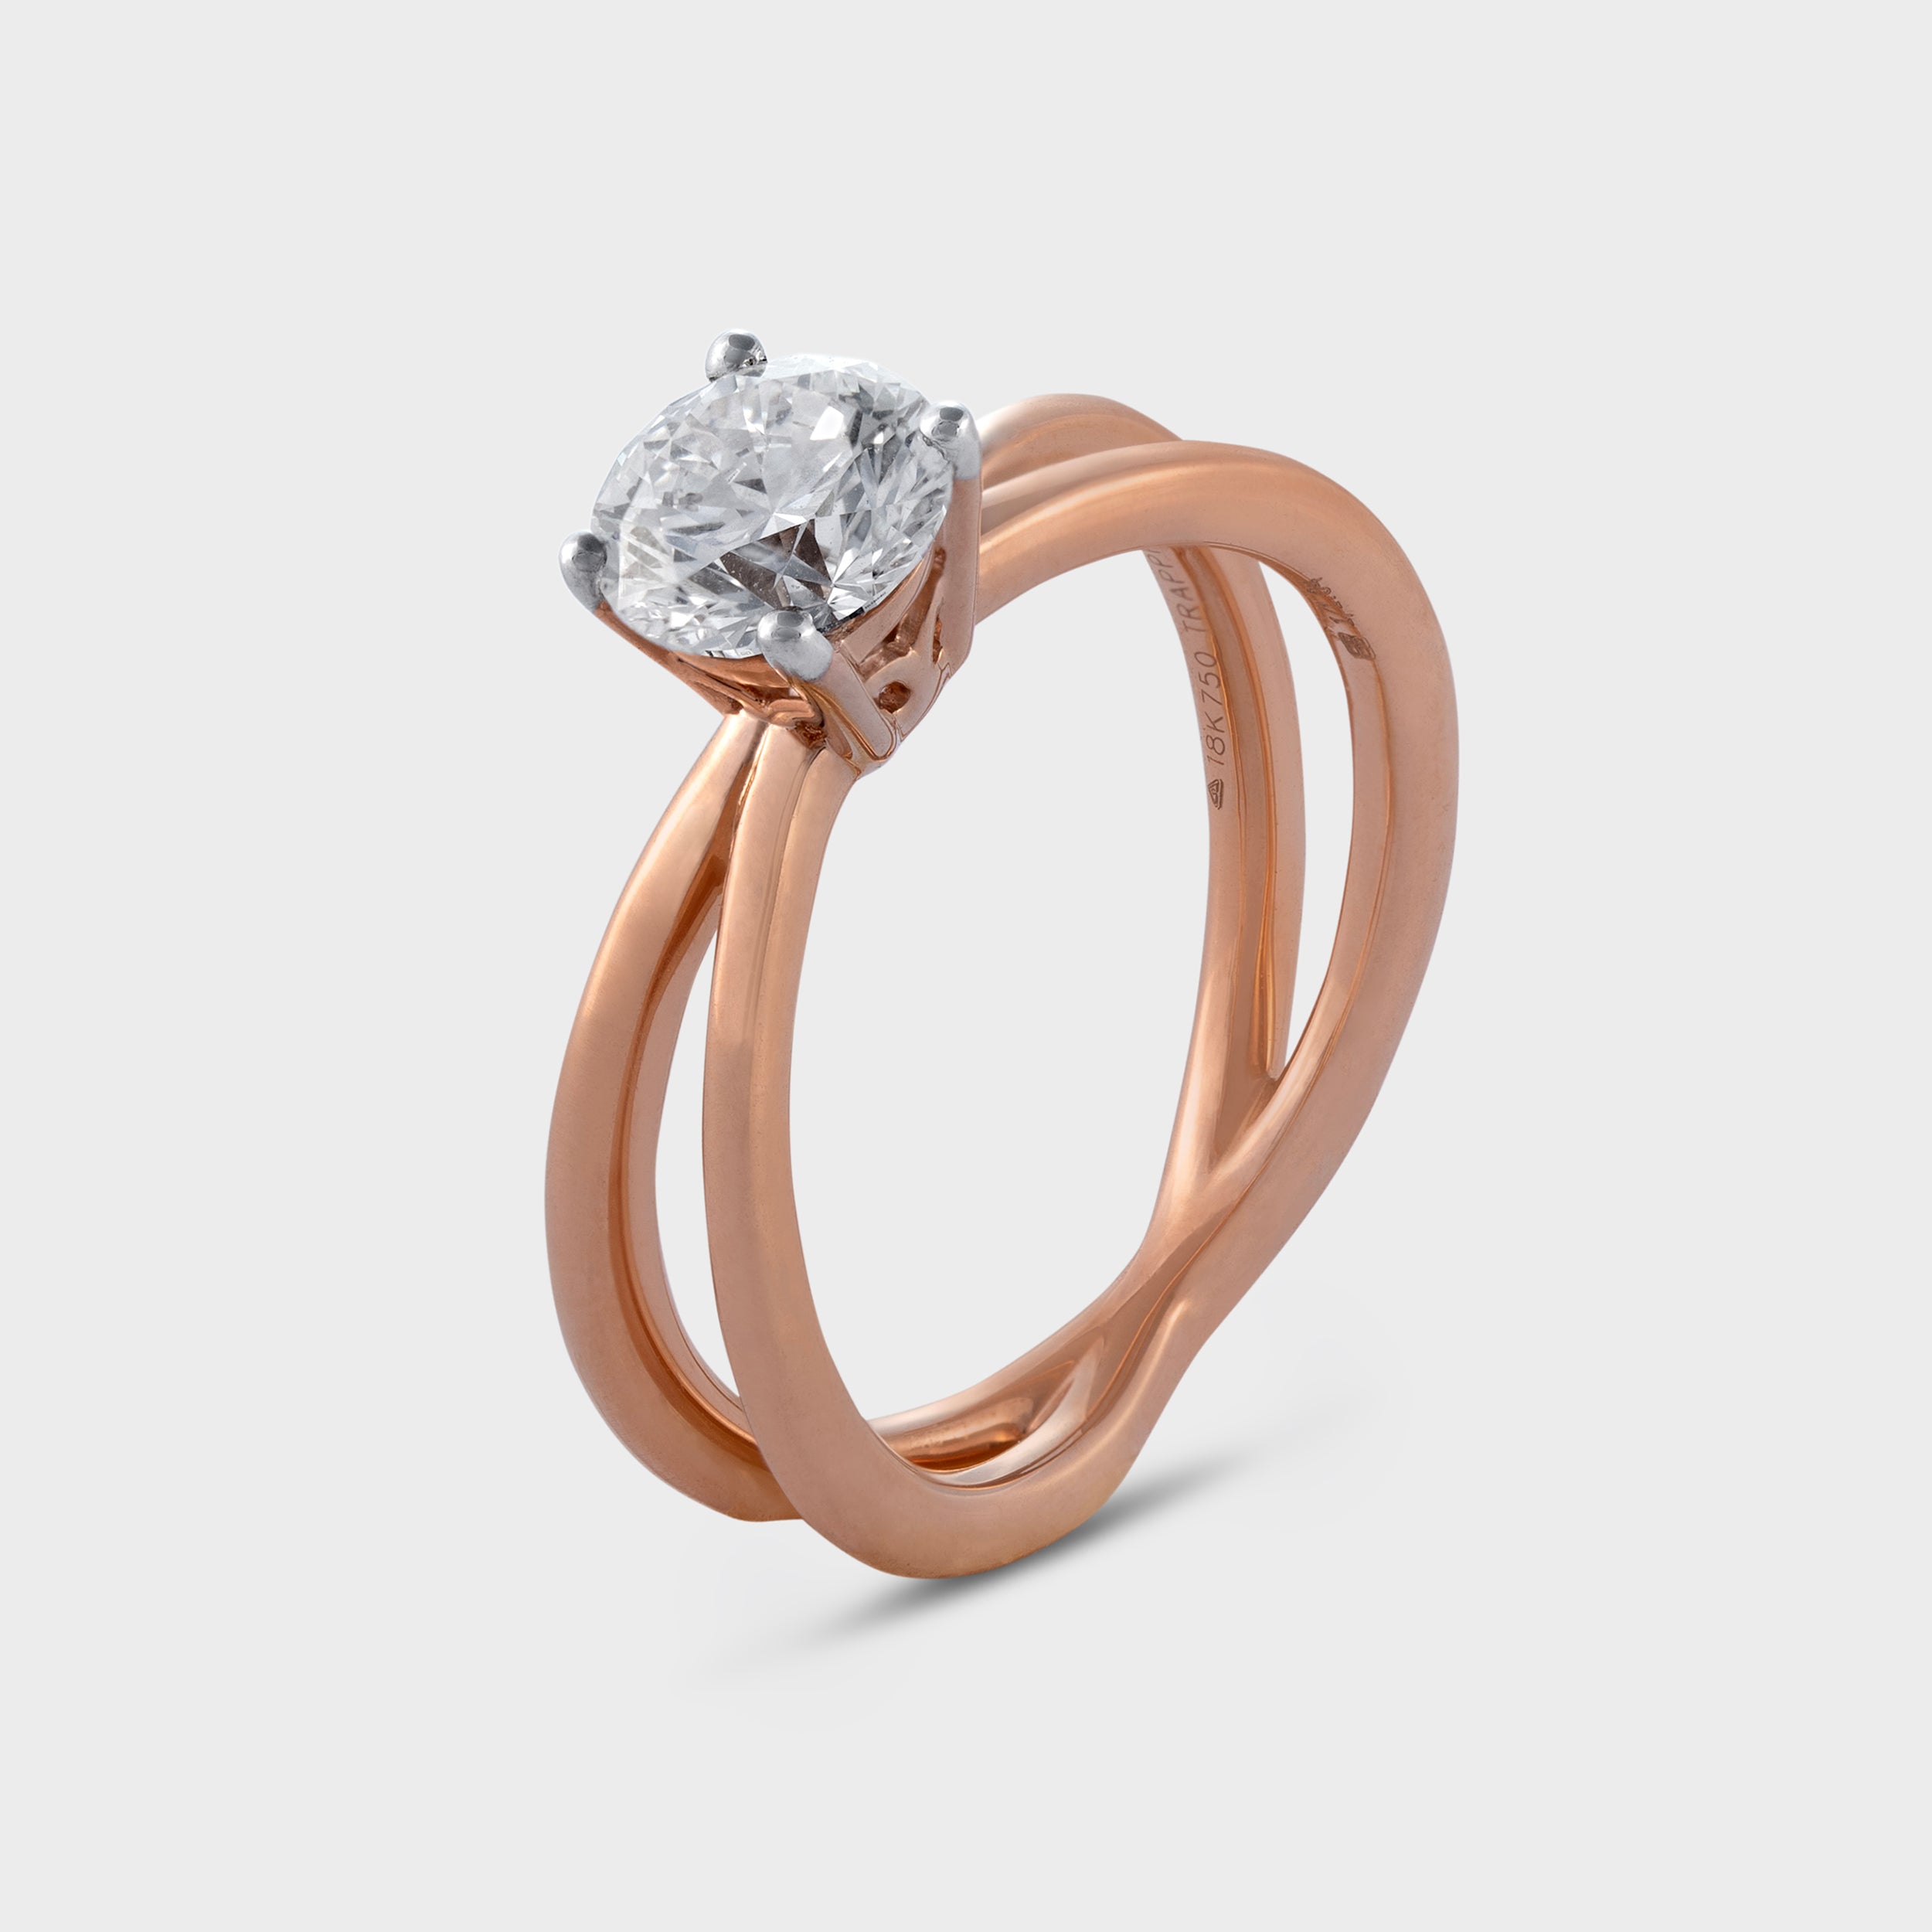 Radiant Rose: Fancy Lab Grown Solitaire Diamond Ring | SKU : 0019503813